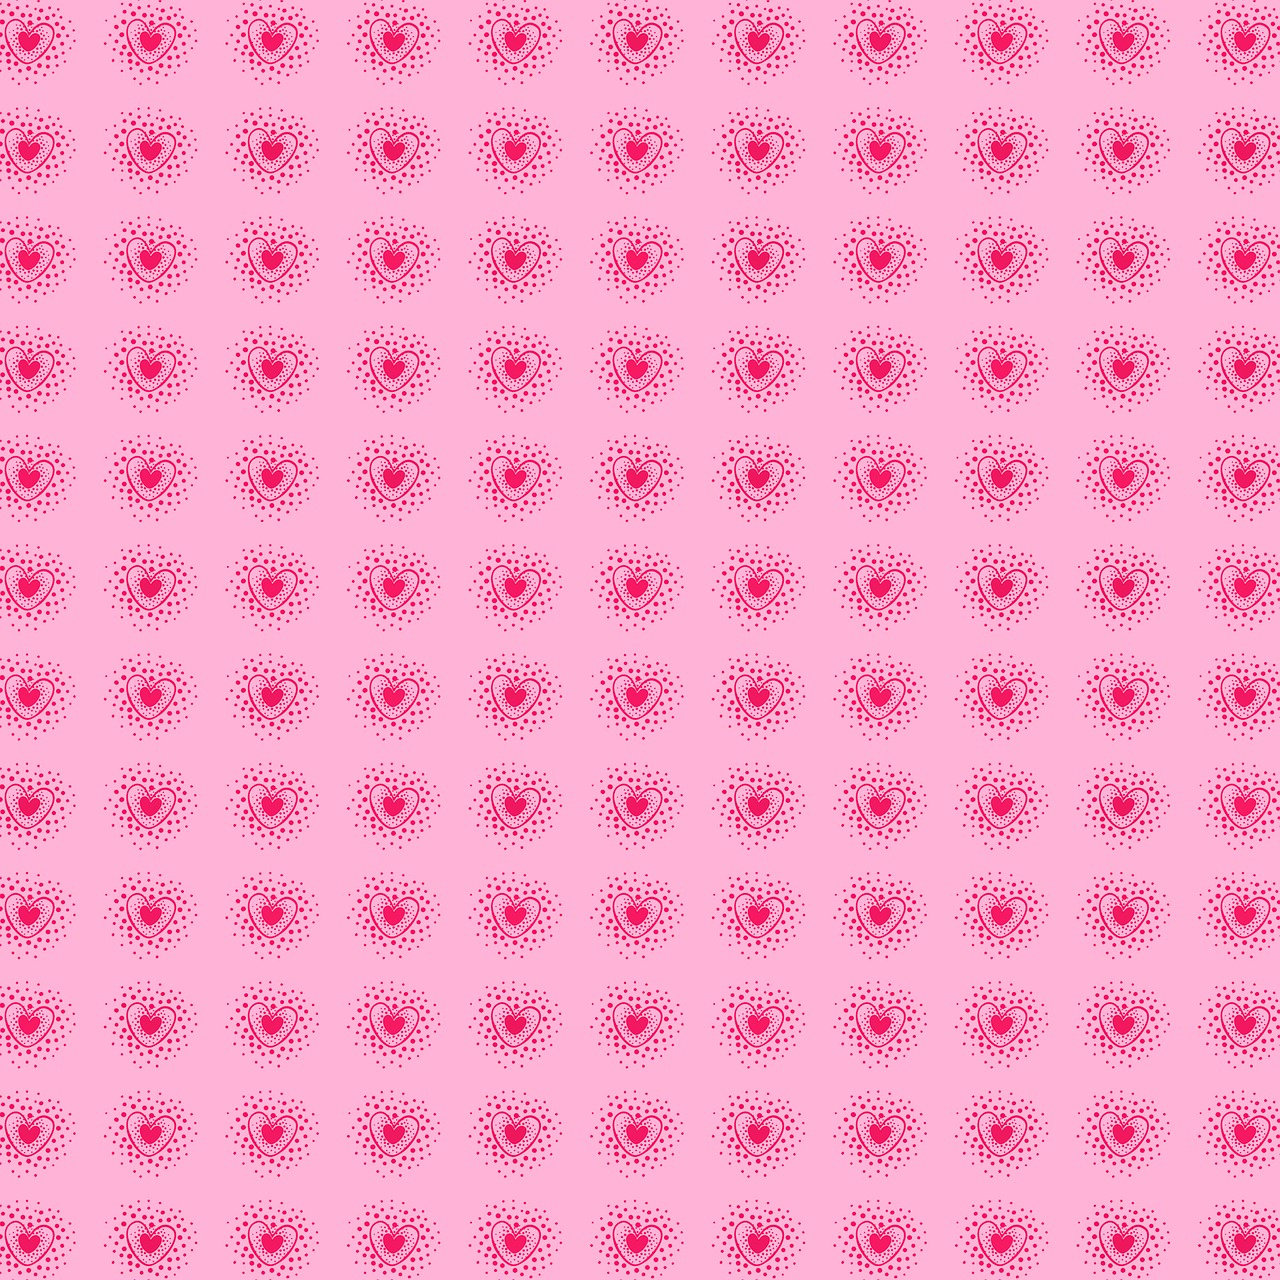 hearts-pattern-design-8504901